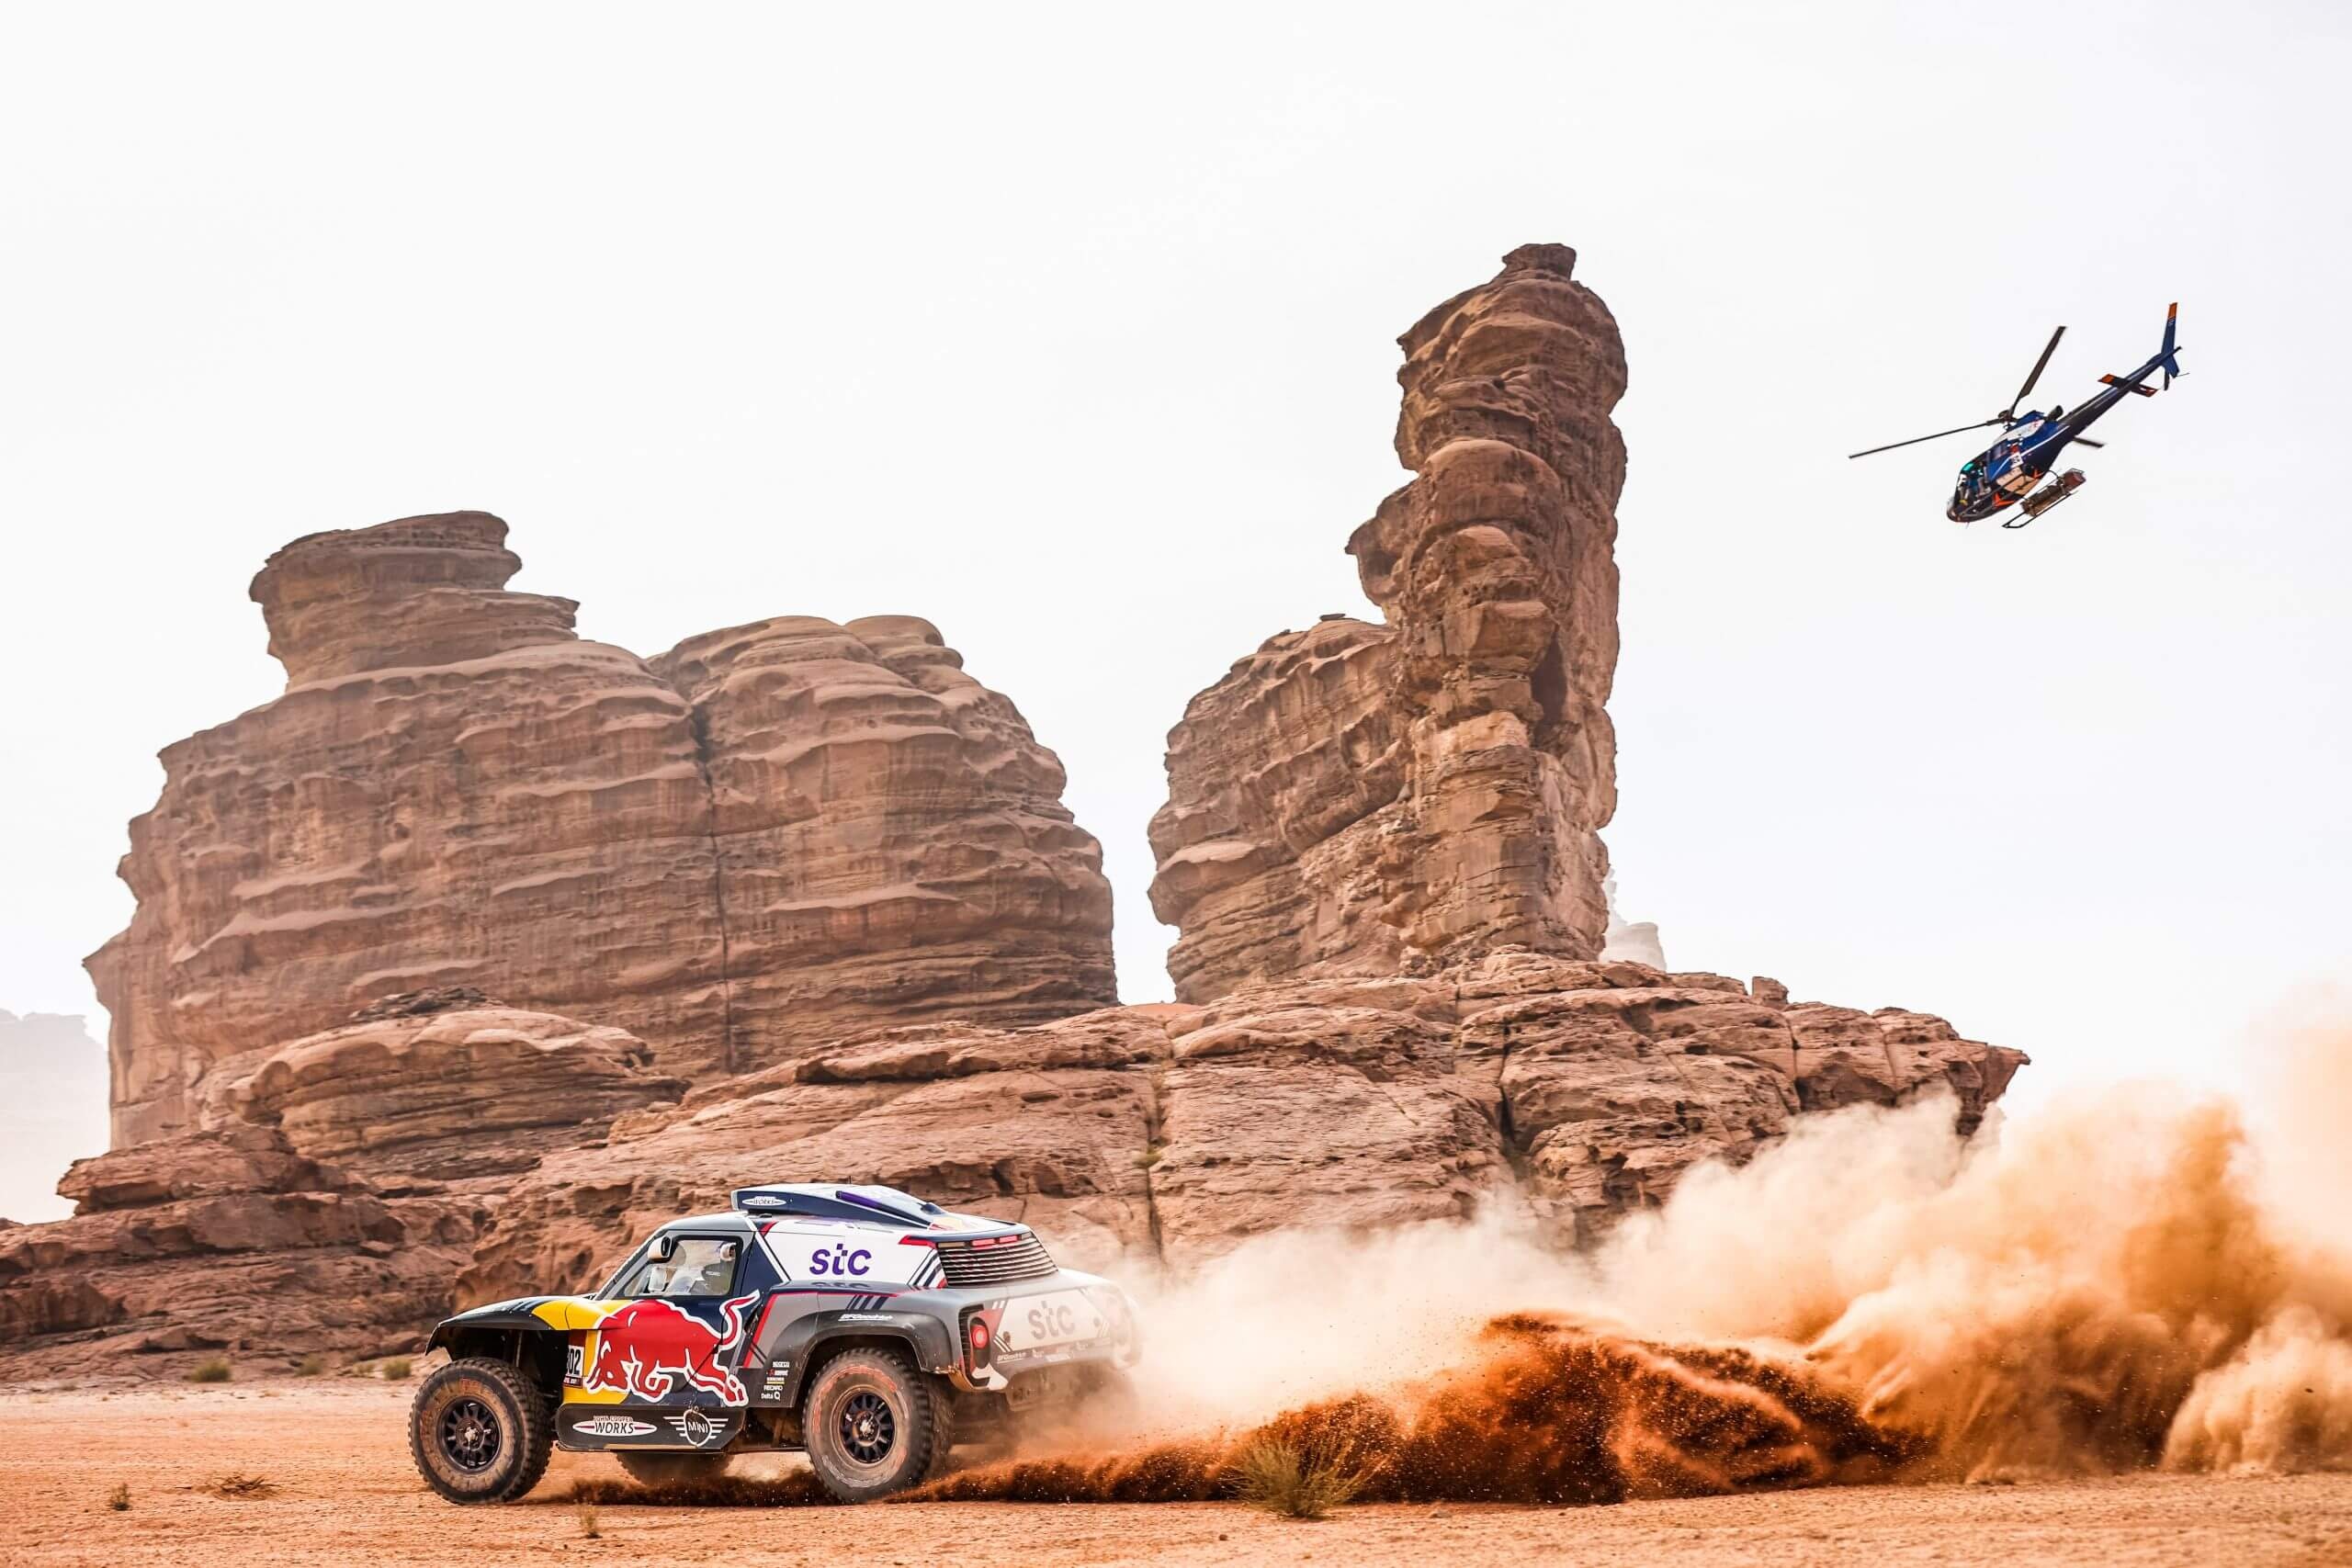 Red Bull Desert Wings, Final push at Ultra, Dakar rally heroes, Triumph within reach, 2560x1710 HD Desktop